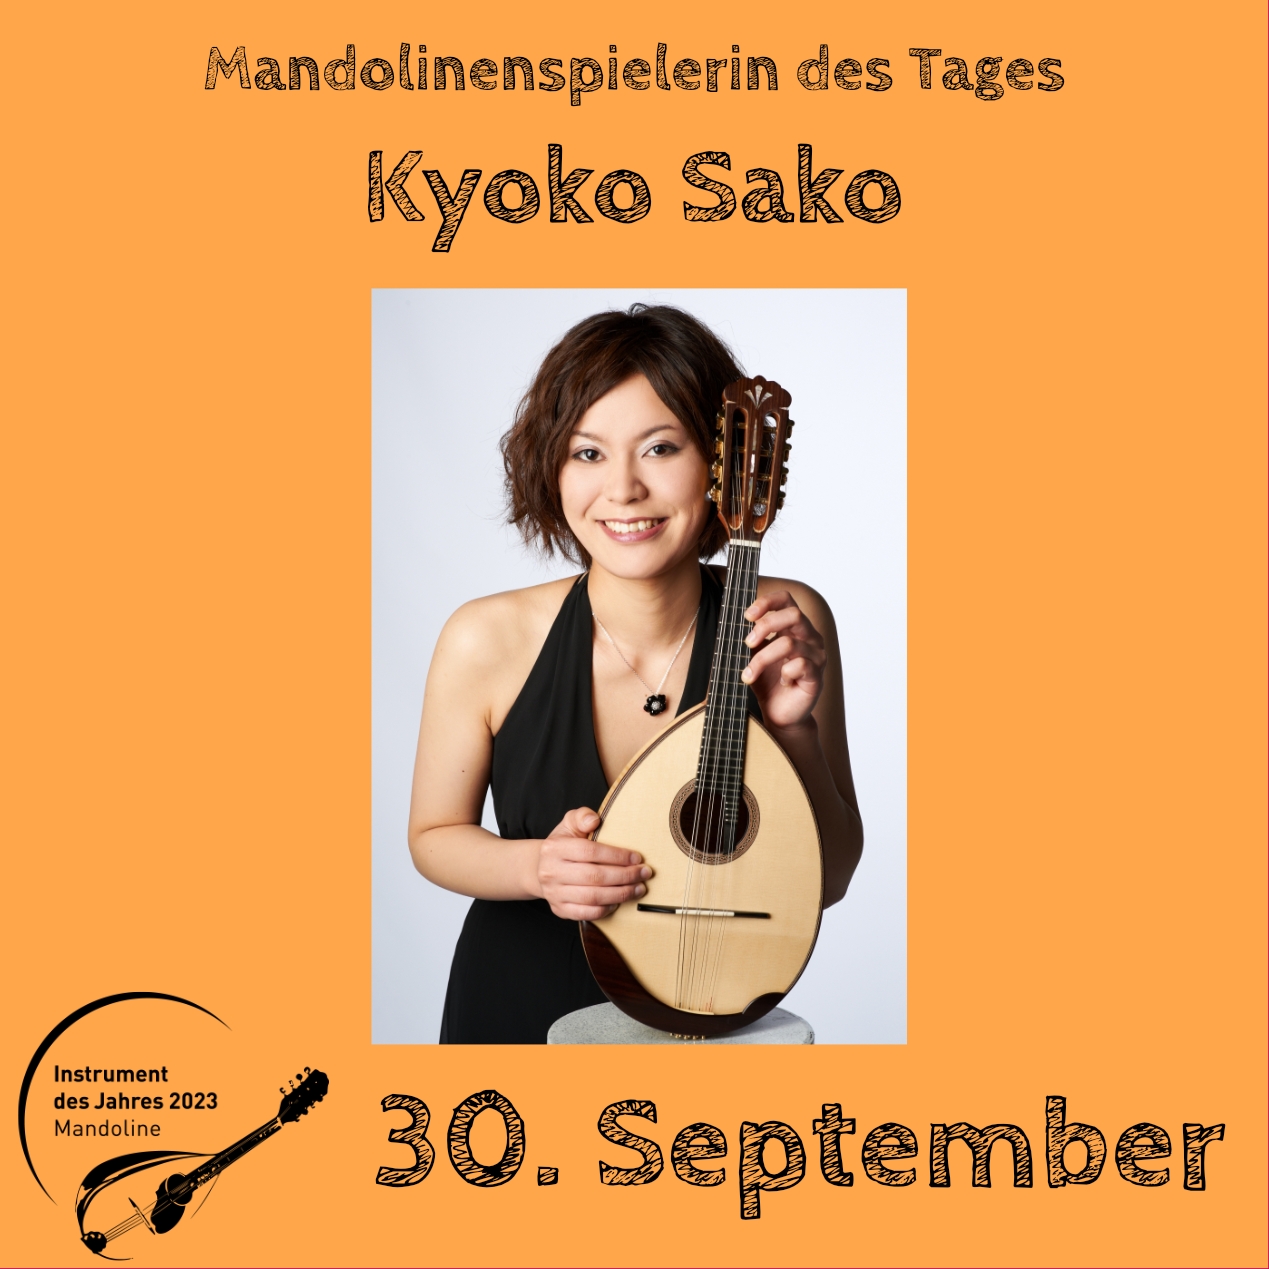 30. September - Kyoko Sako Mandoline Instrument des Jahres 2023 Mandolinenspieler Mandolinenspielerin des Tages